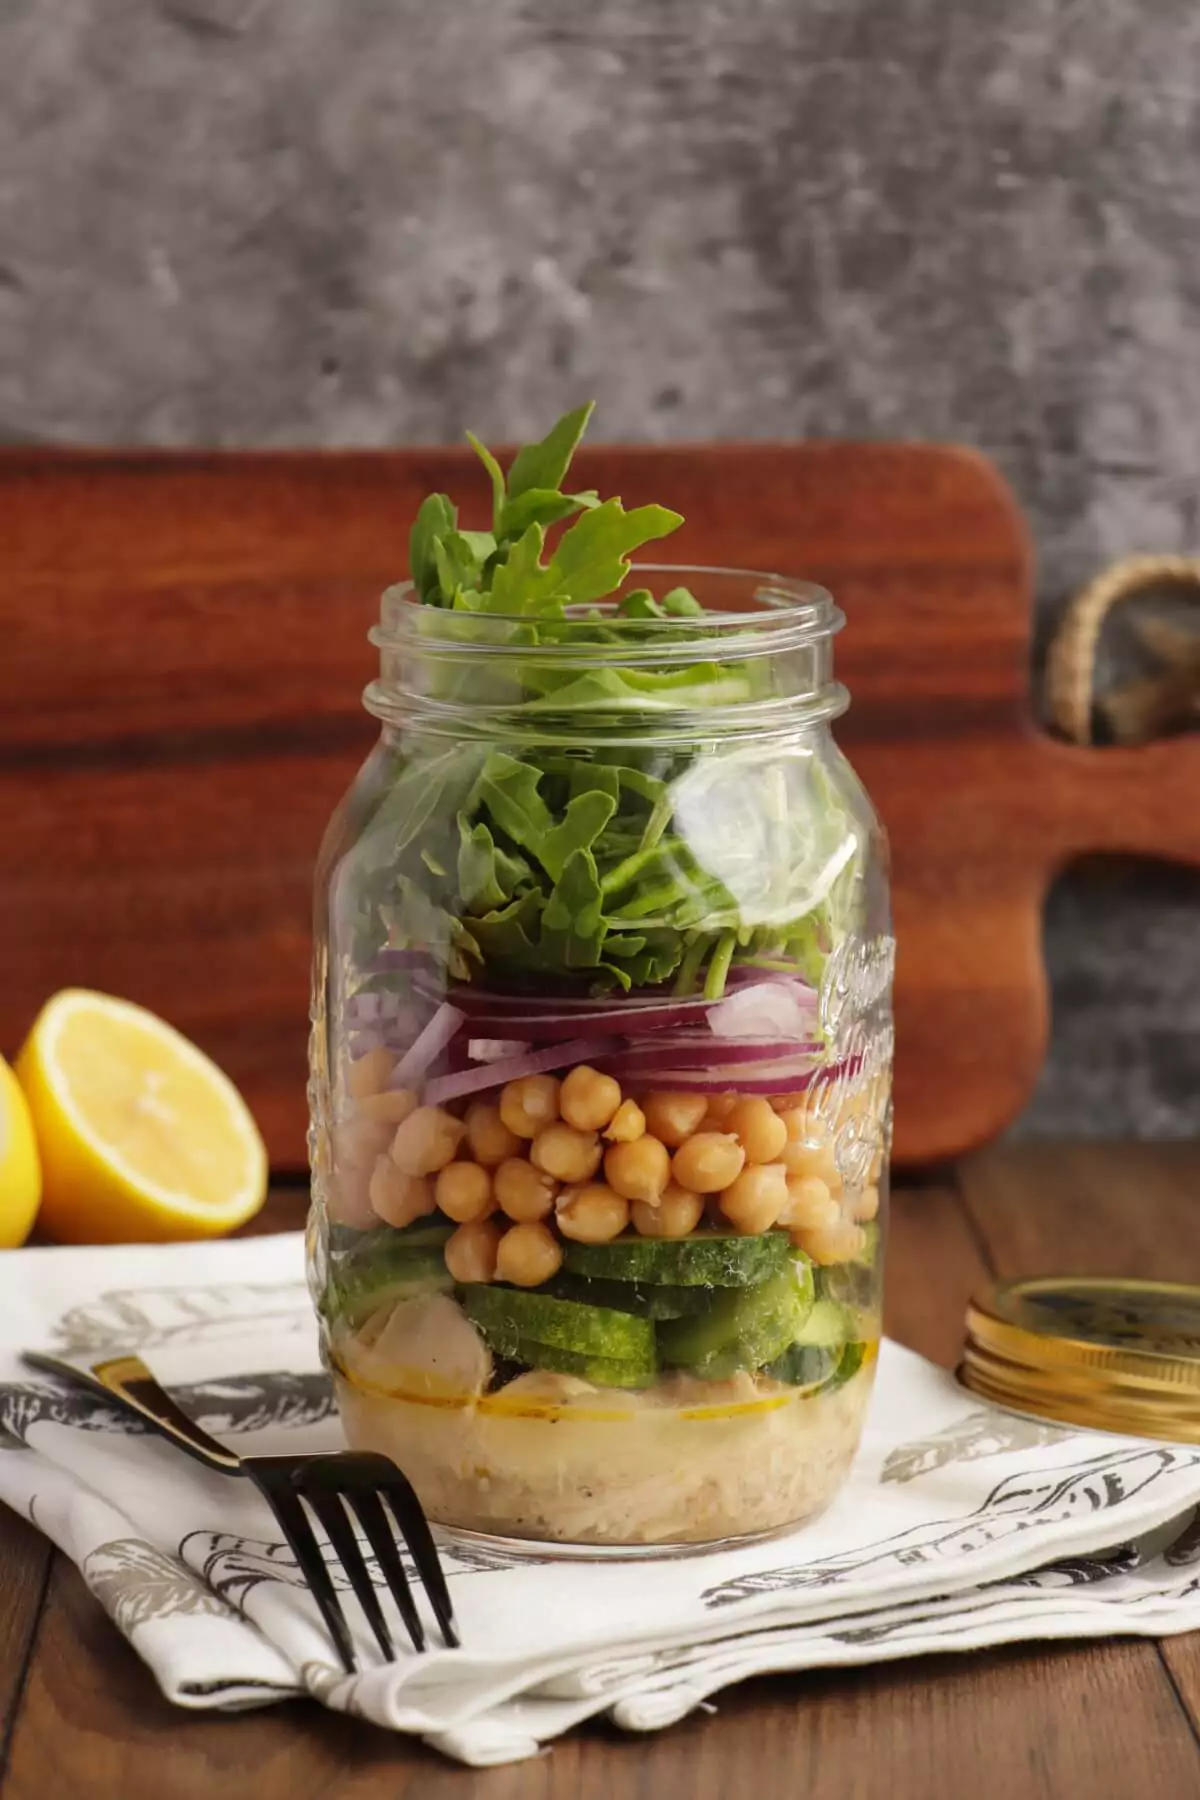 How to Make a Loaded Tuna Mason Jar Salad for Lunch